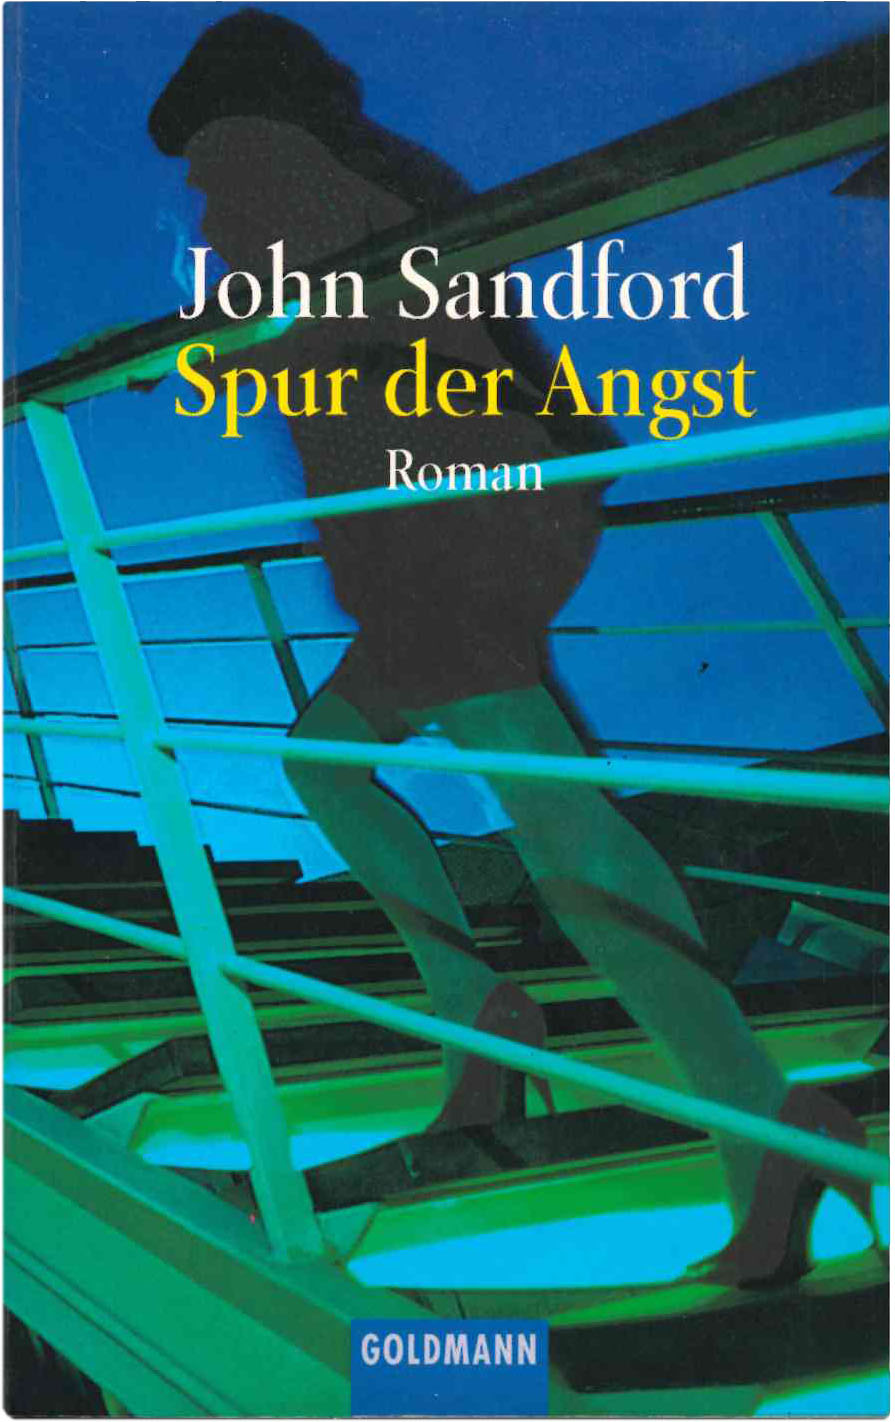 John Sandford. Spur der Angst. Goldmann 1999